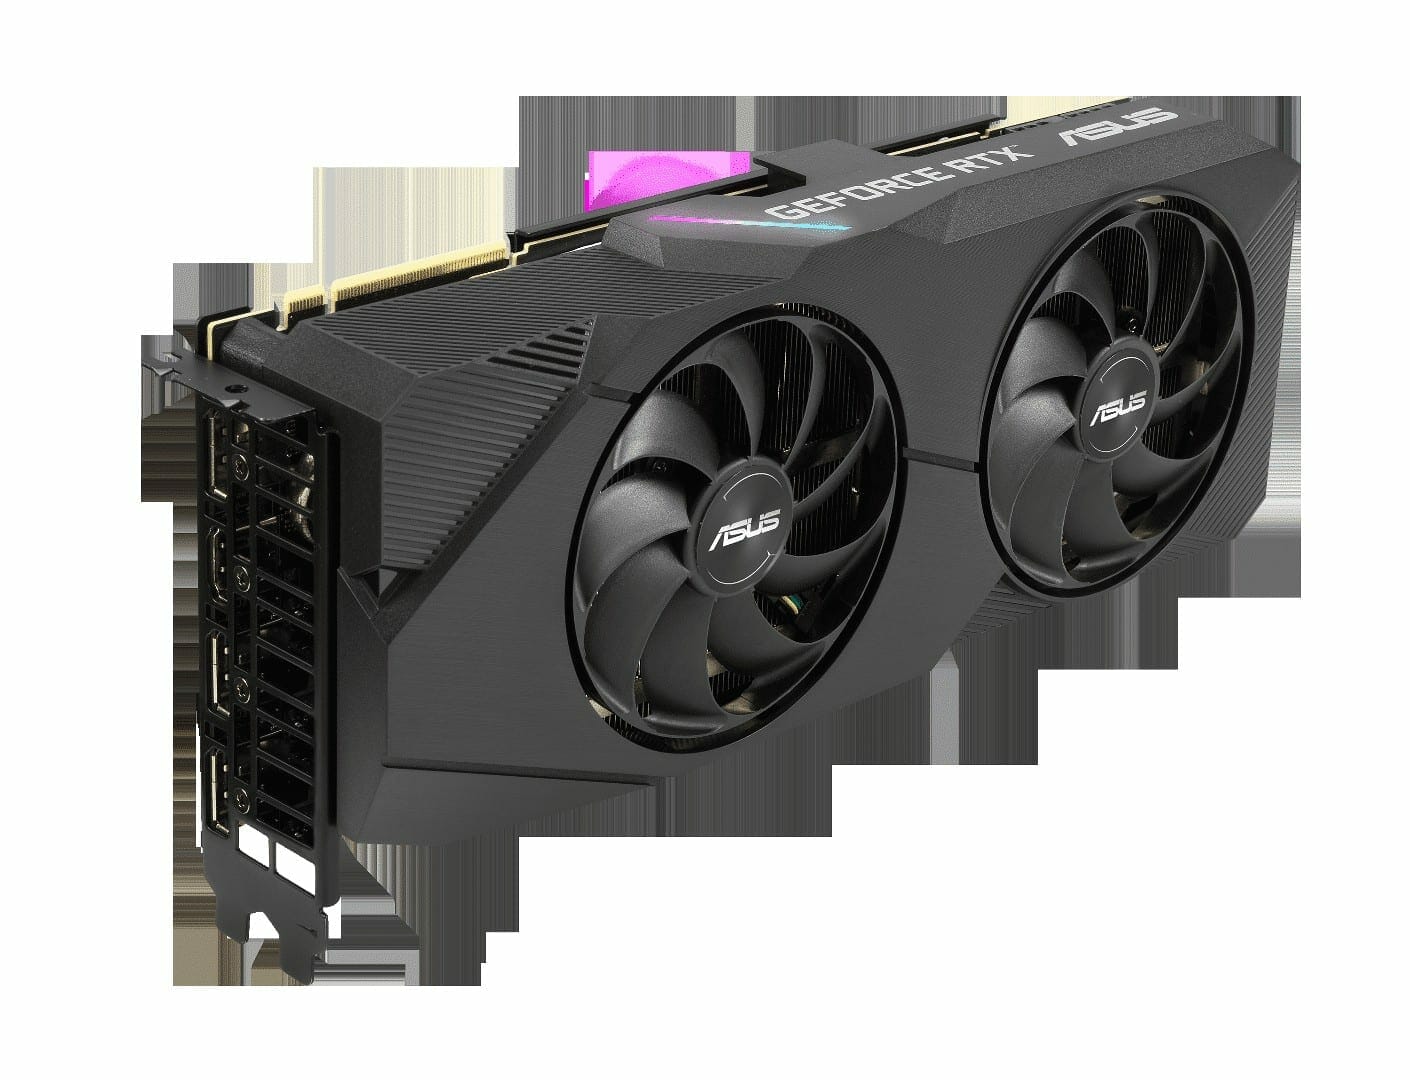 ASUS เปิดตัวกราฟิกการ์ด Nvidia GeForce RTX 2080, 2070, และ 2060 SUPER พร้อมกันถึง 8 รุ่น ครบทุกซีรีส์ 3